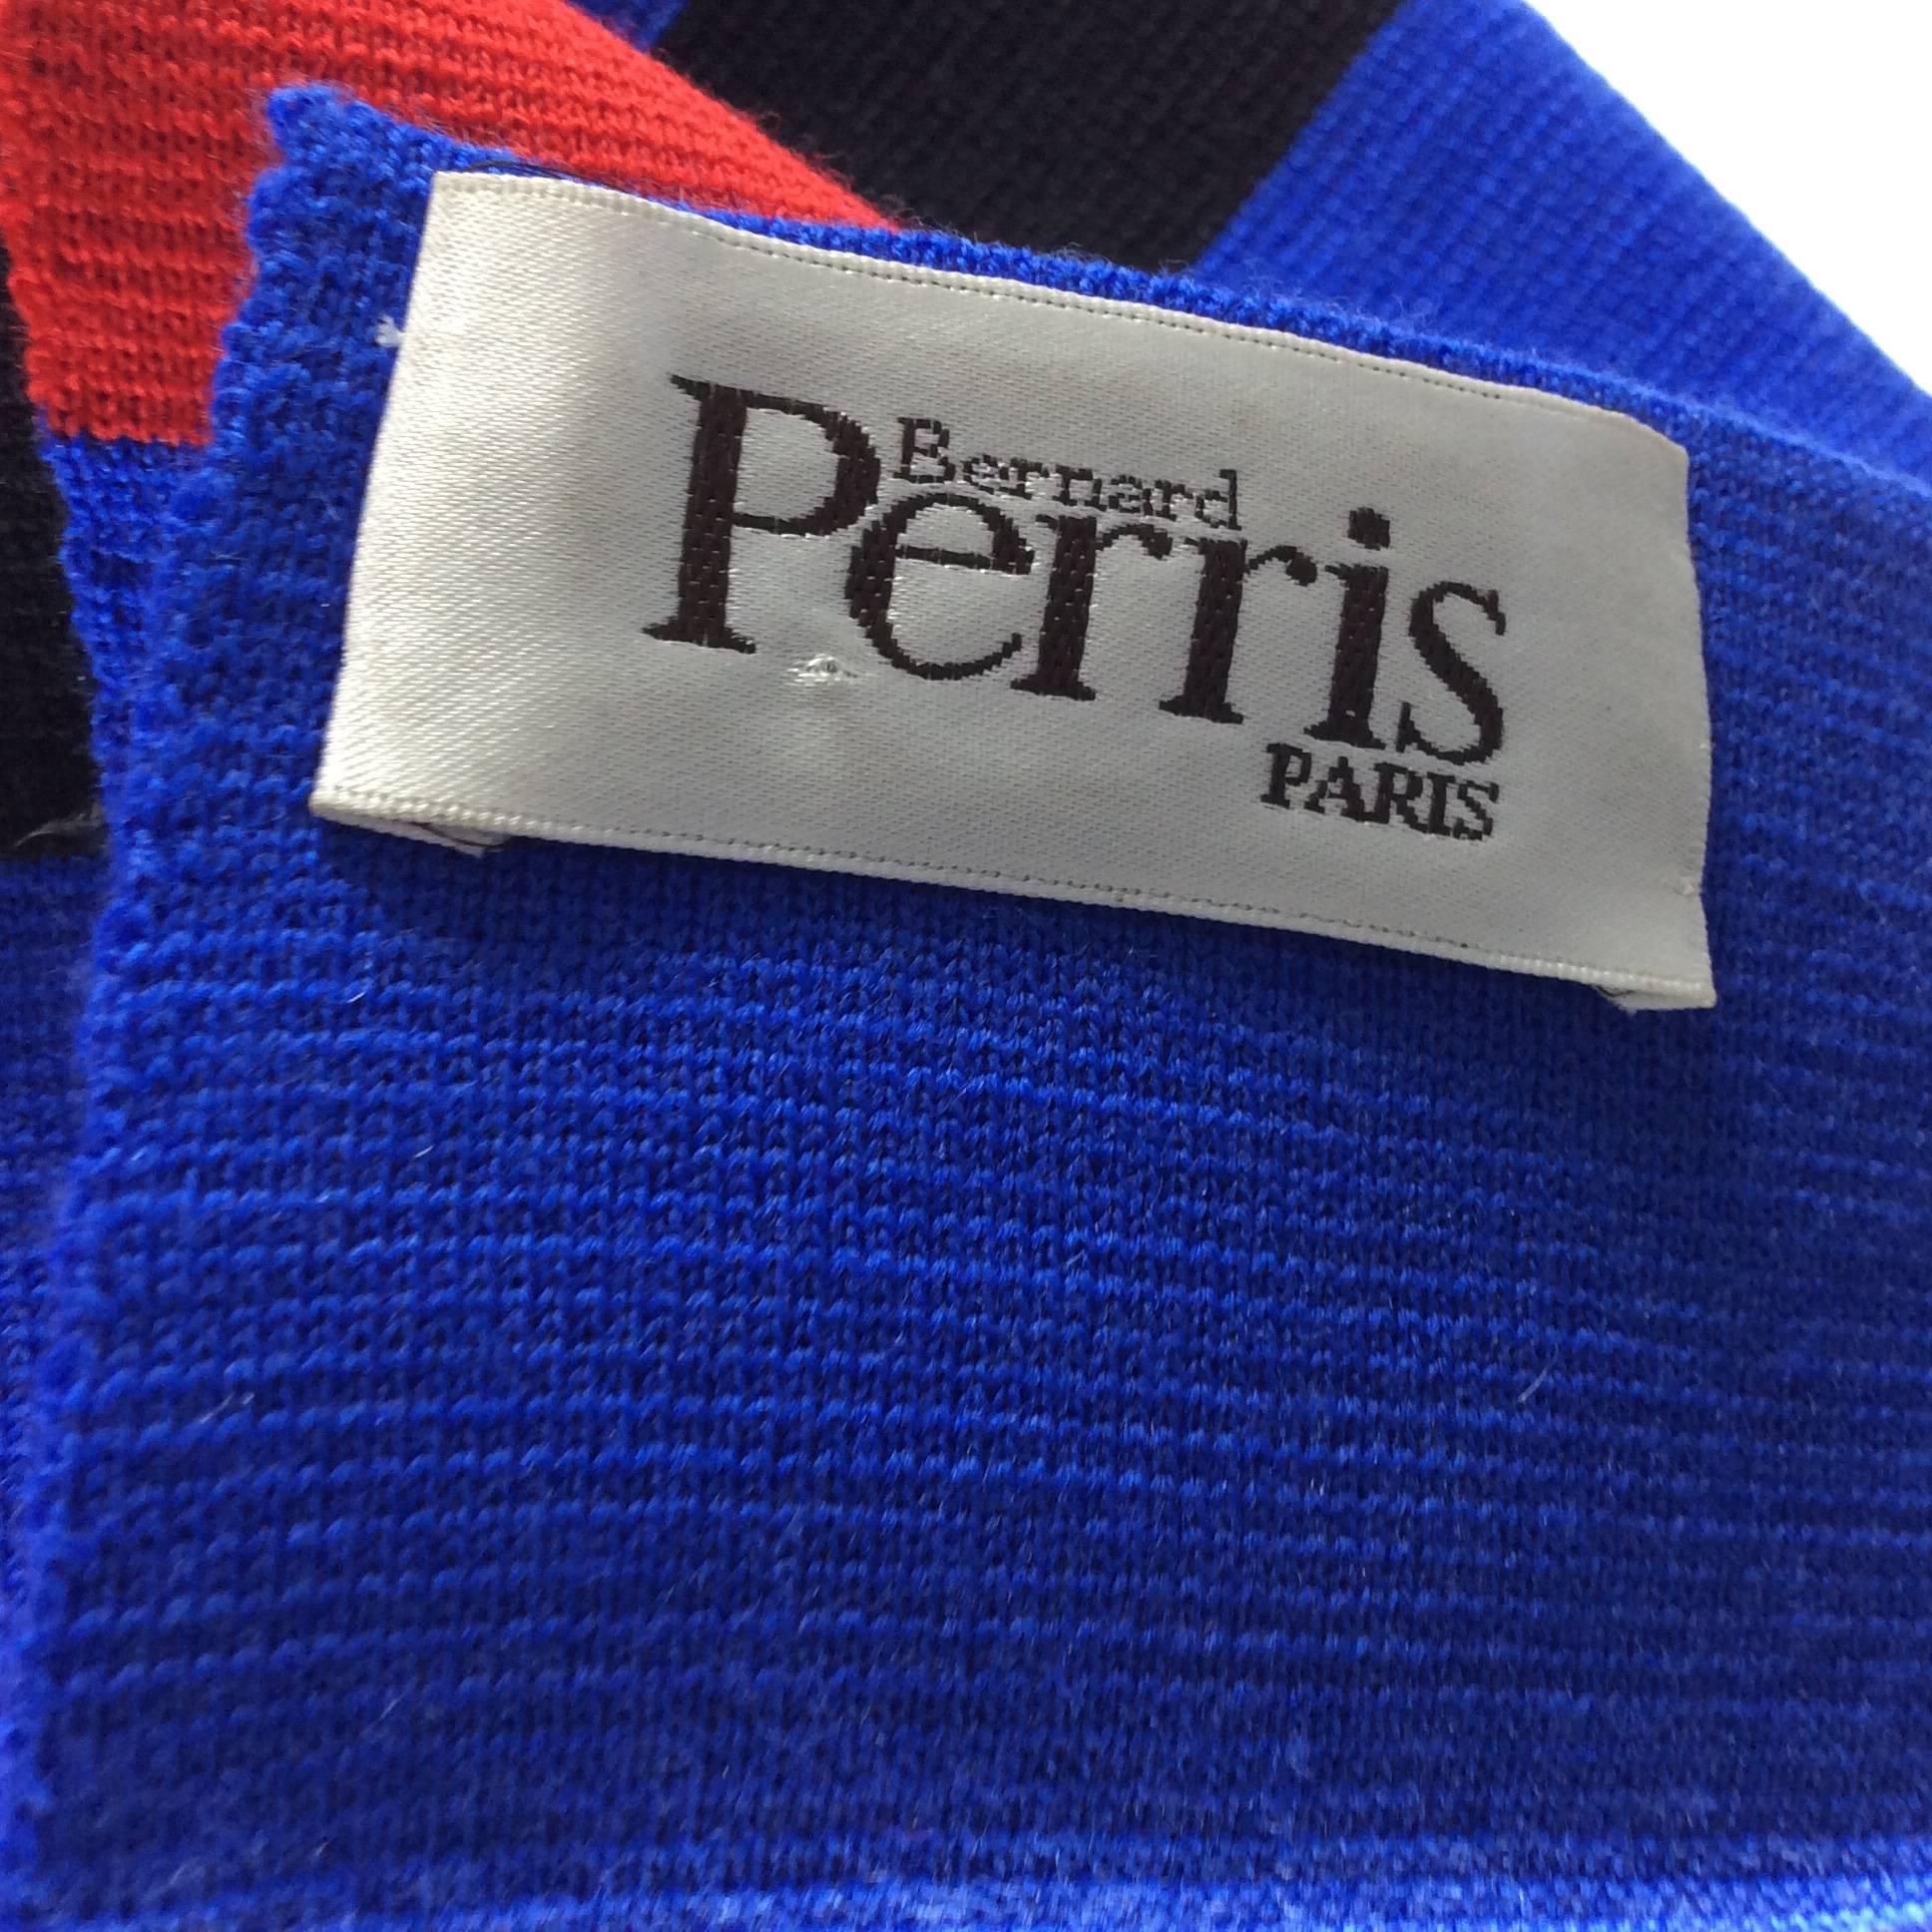 Bernard Perris Black Blue and Red Sweater Dress 2